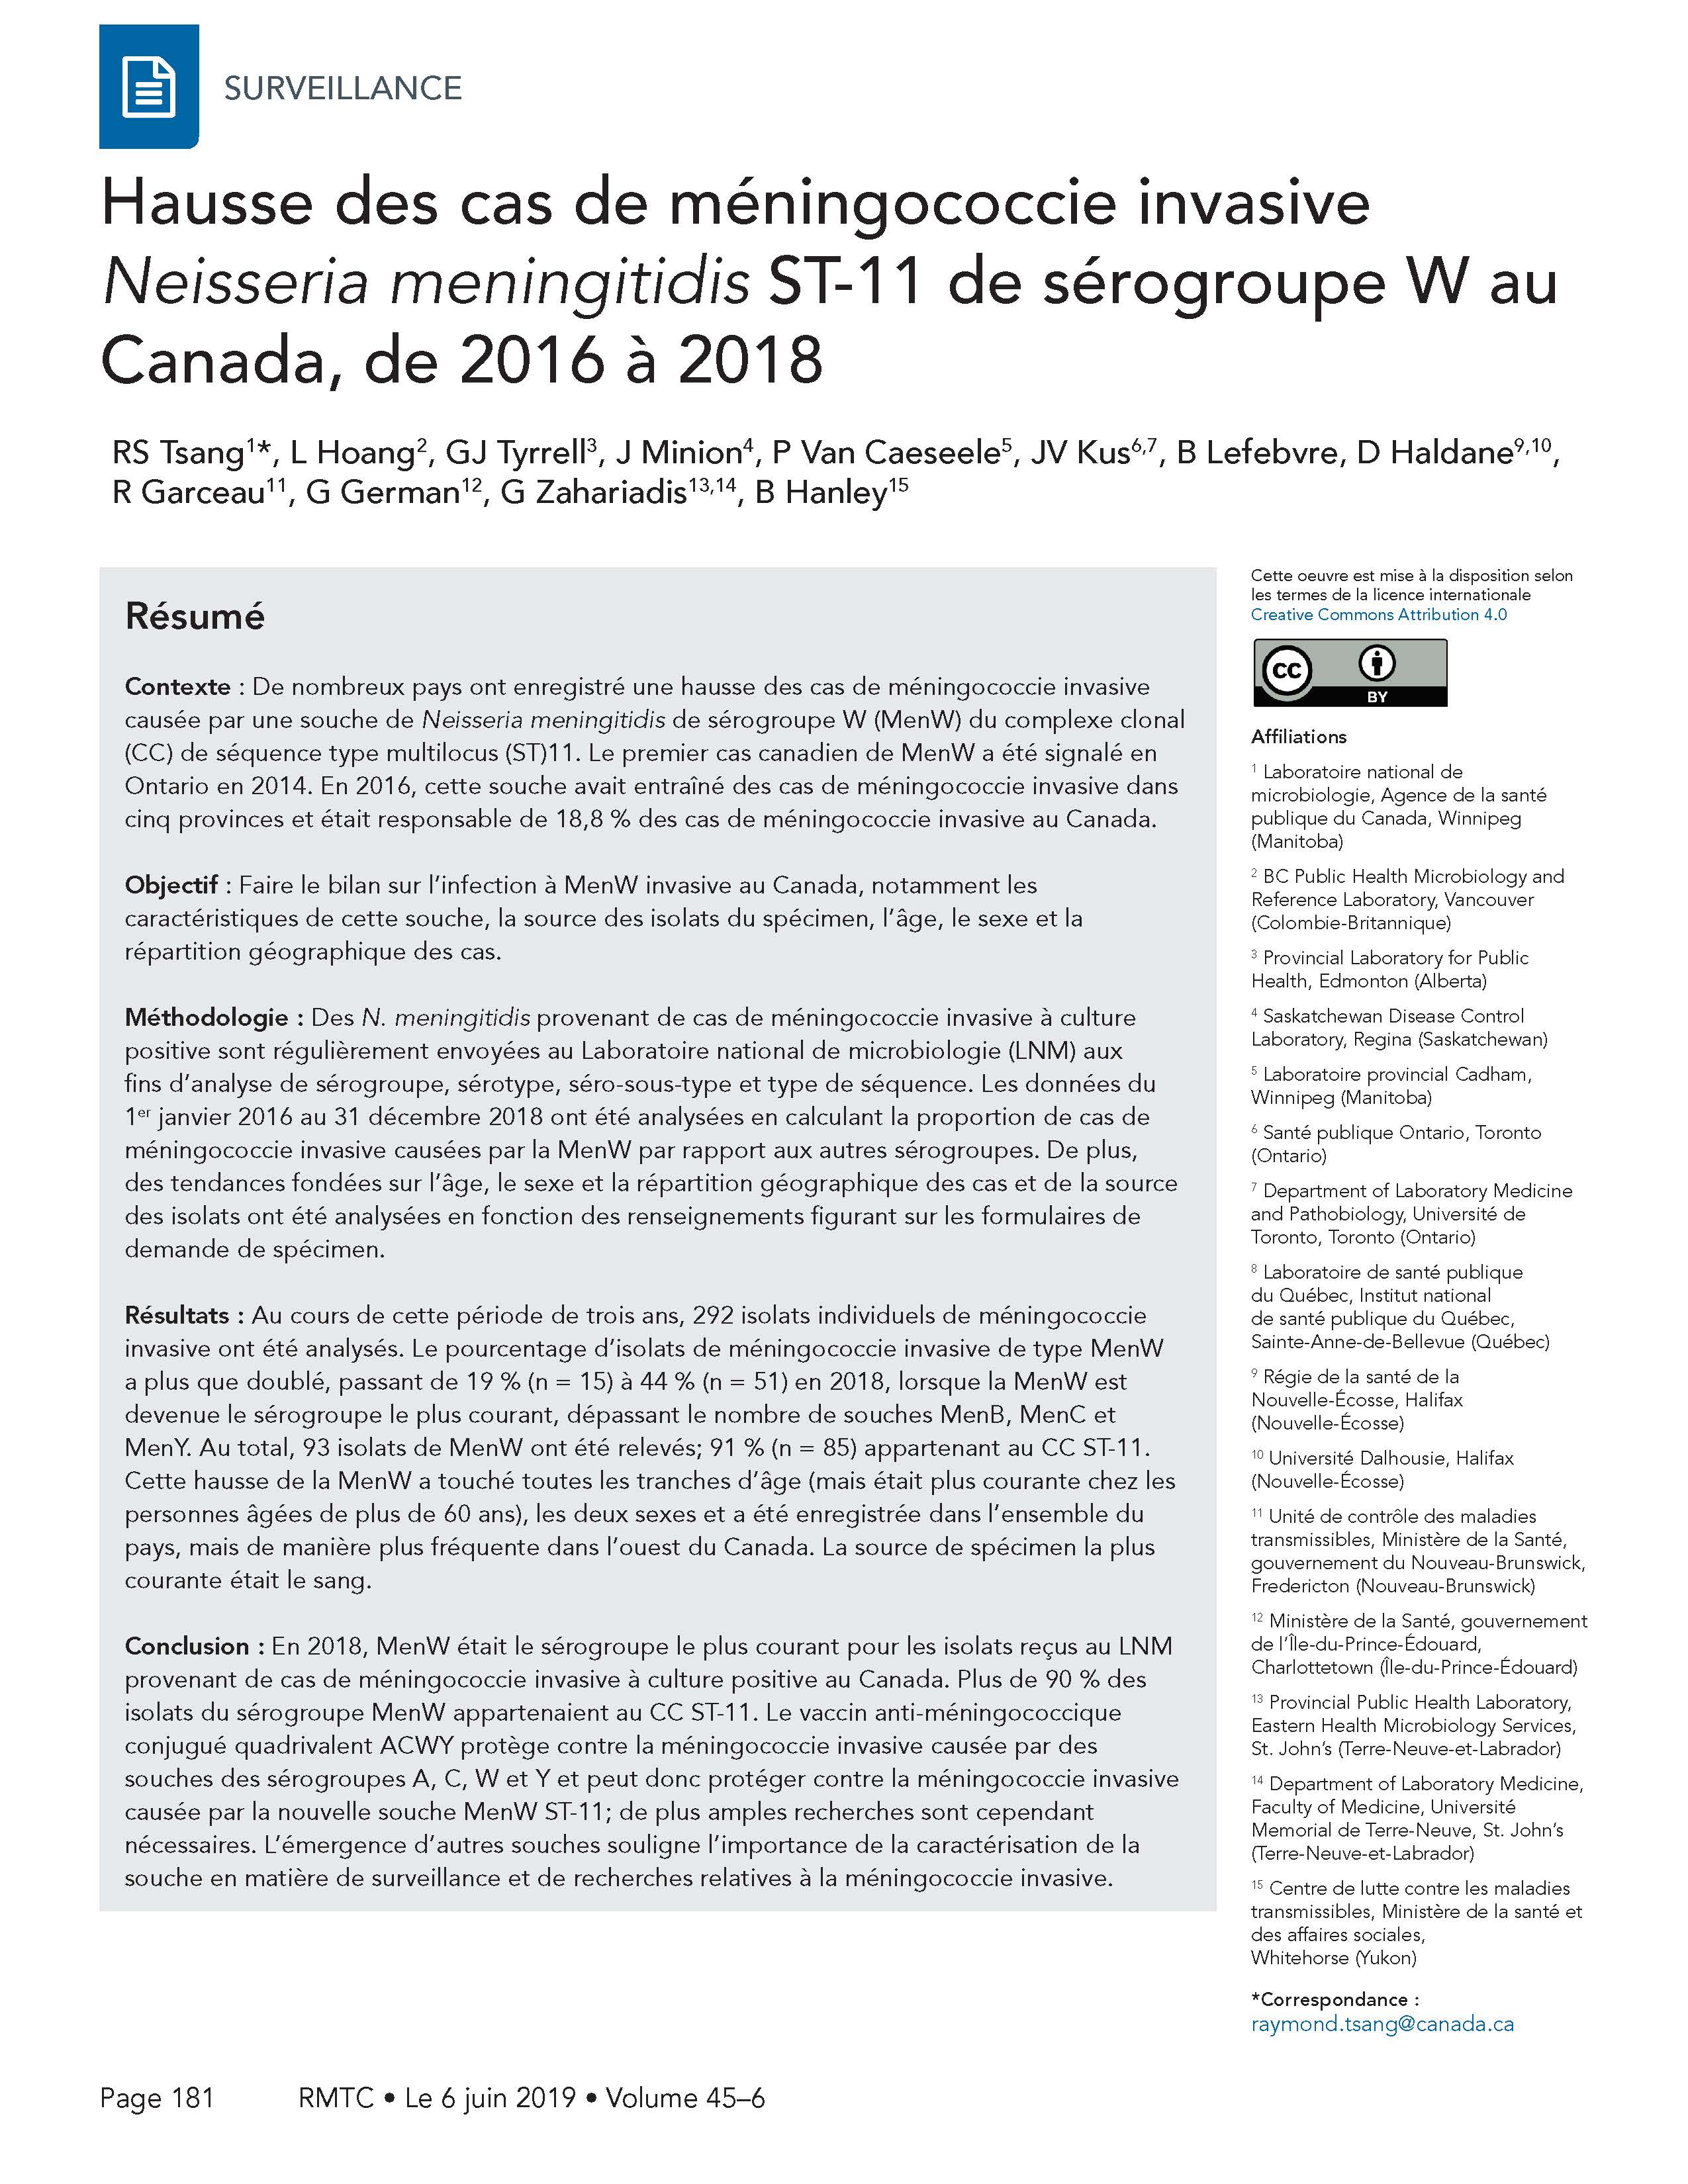 Augmentation de neisseria meningitidis du sérogroupe W, 2019